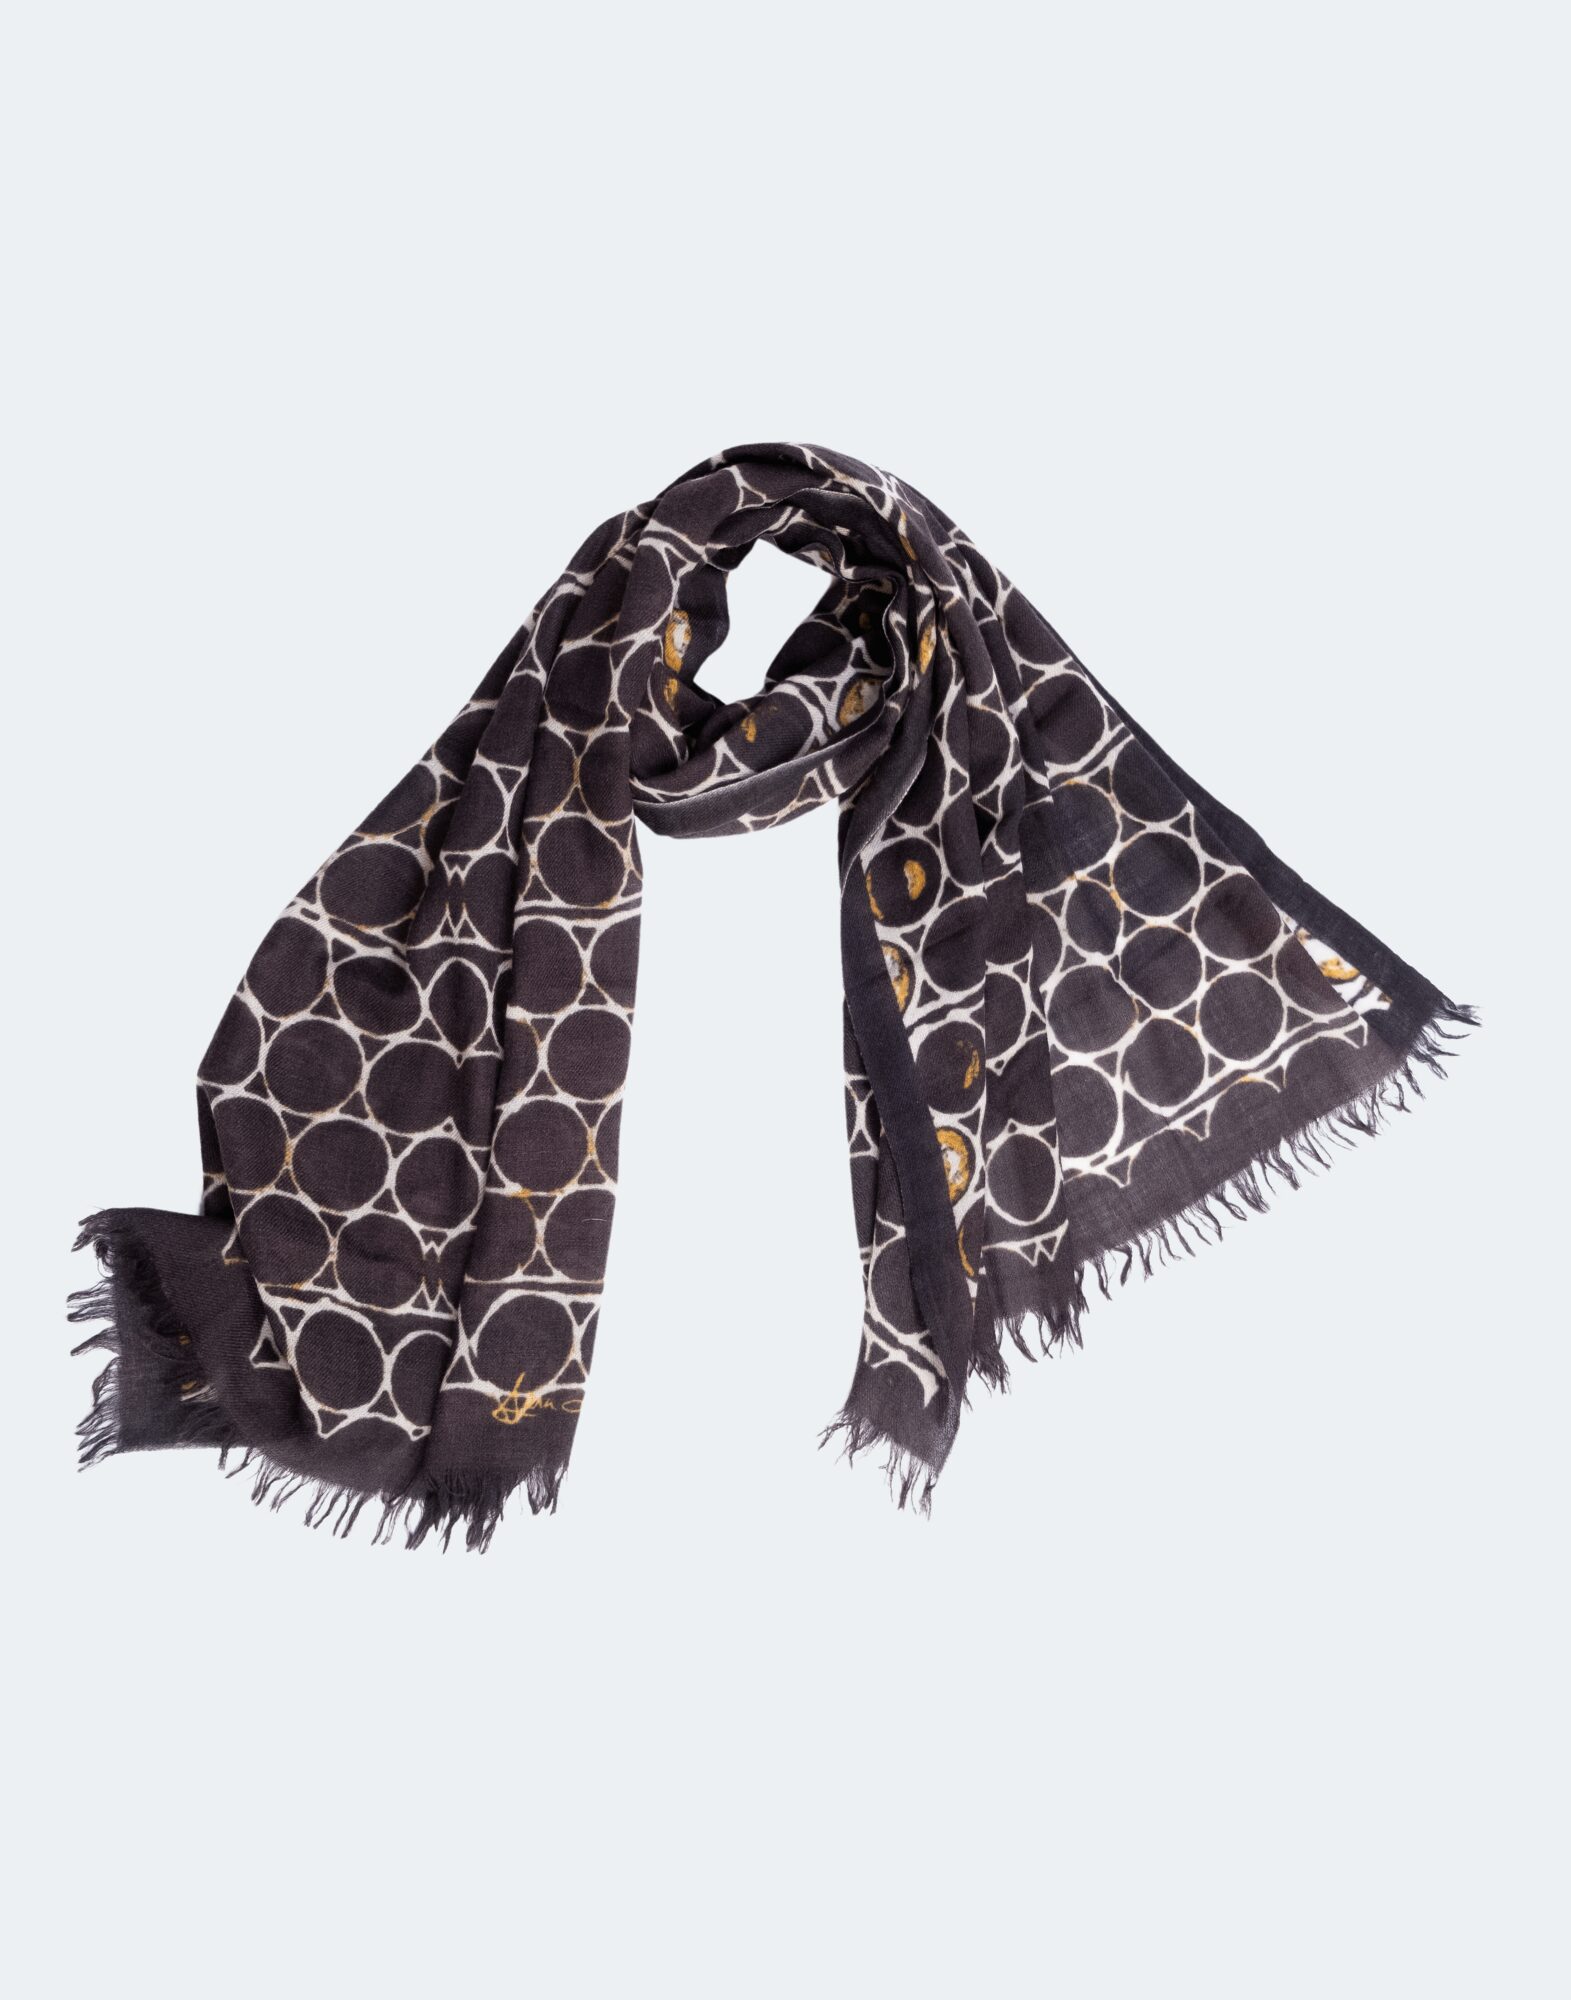 dark scarf with circular pattern